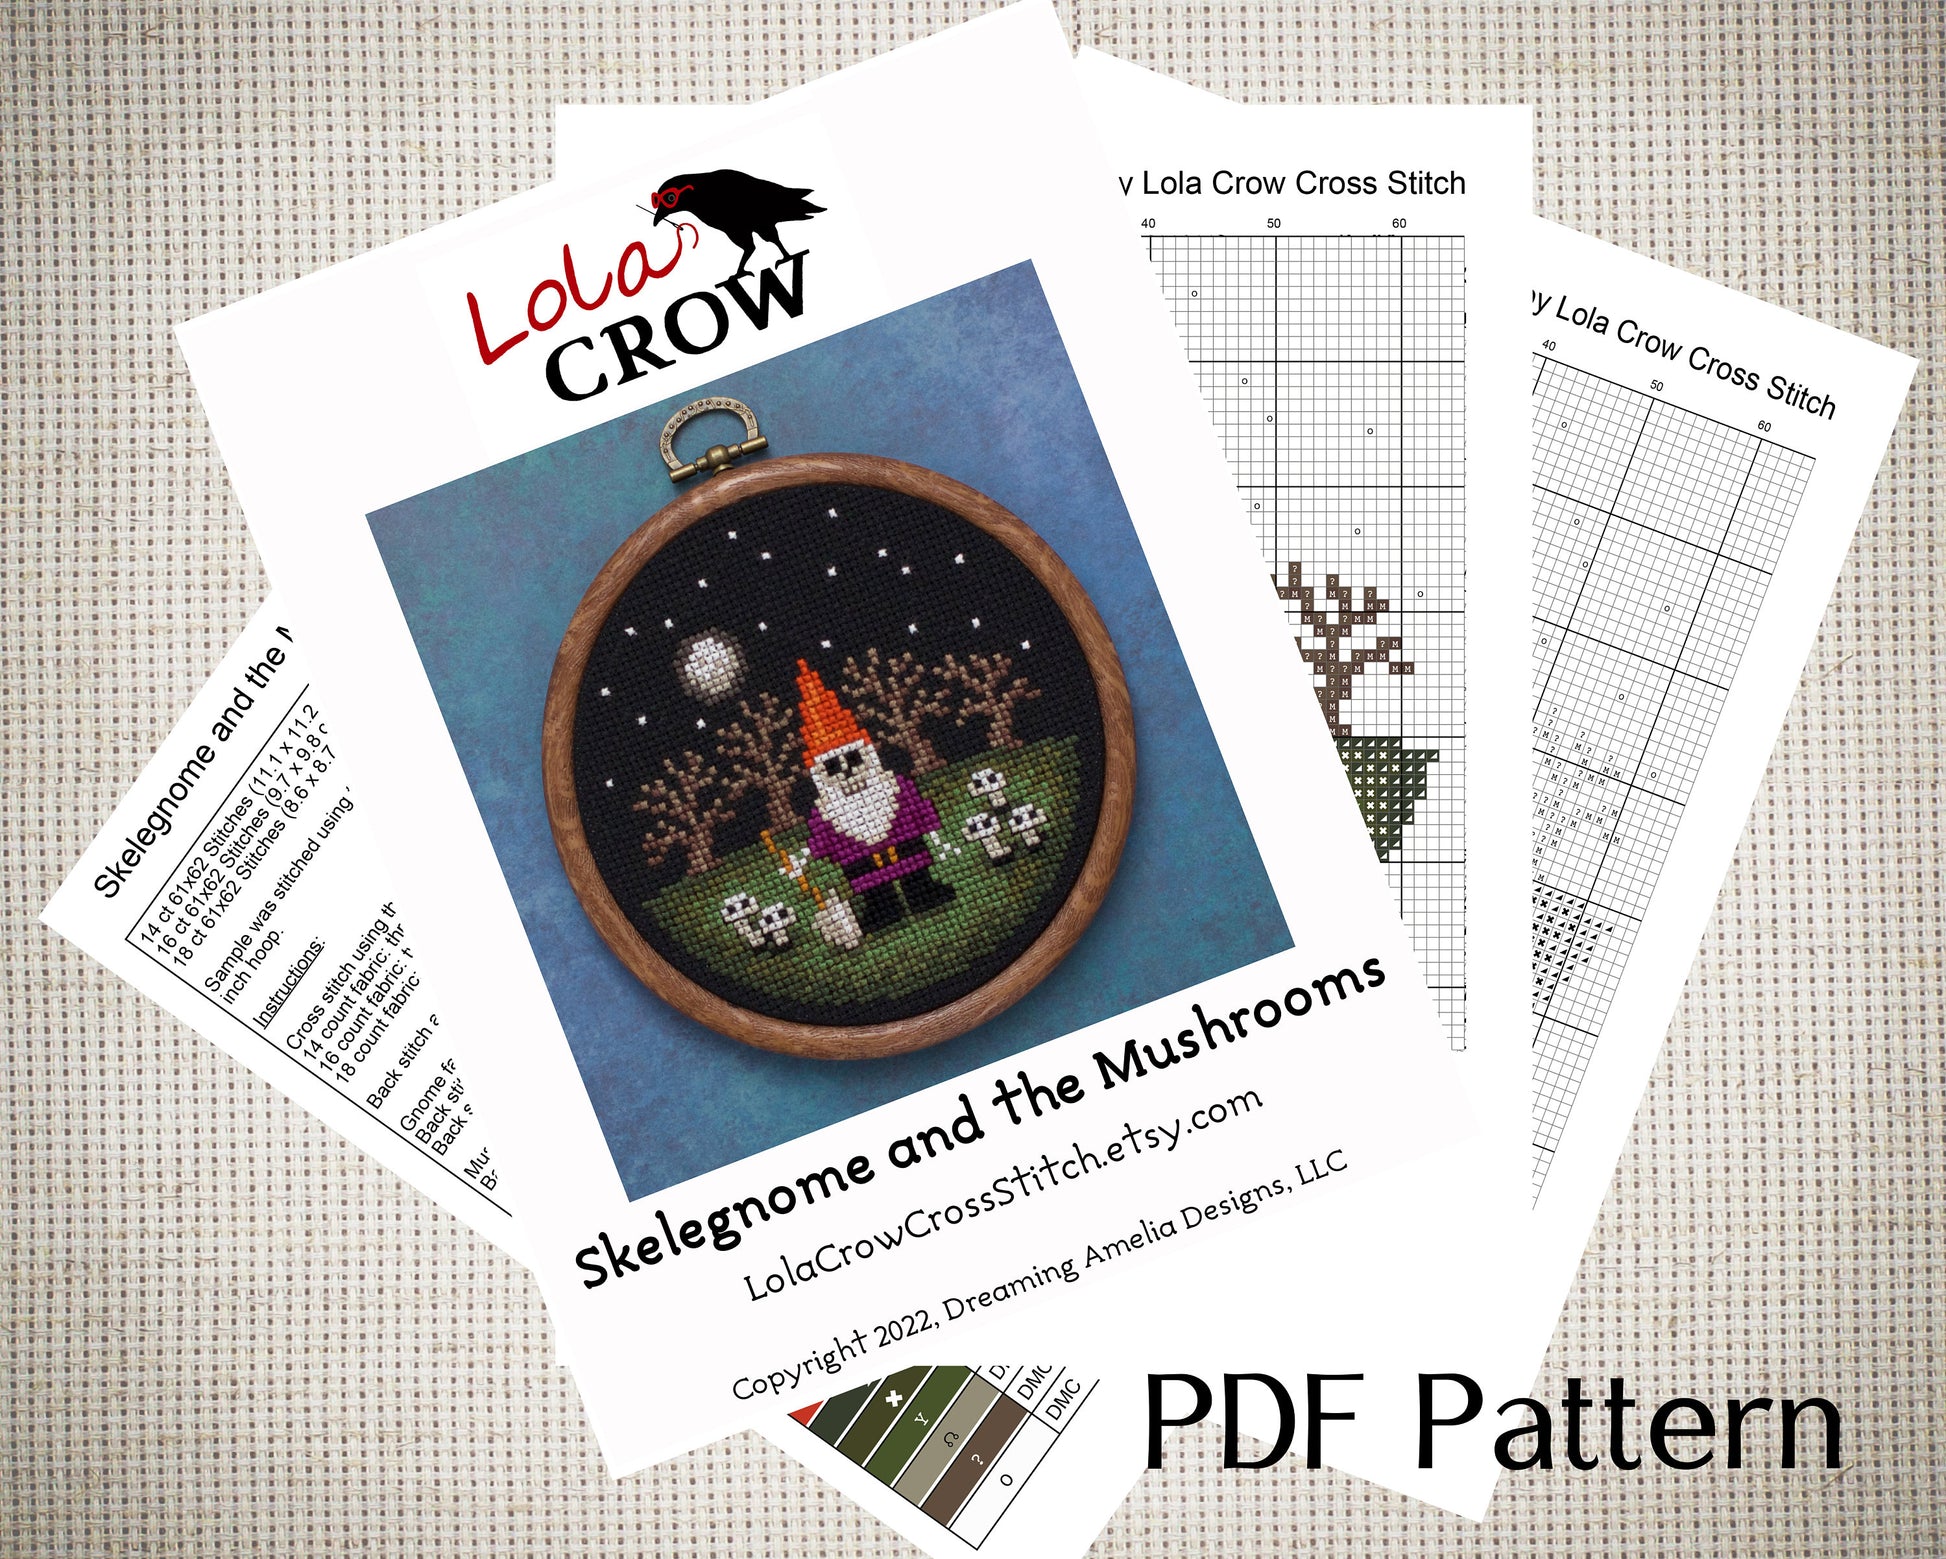 Lola Crow Cross Stitch Patterns